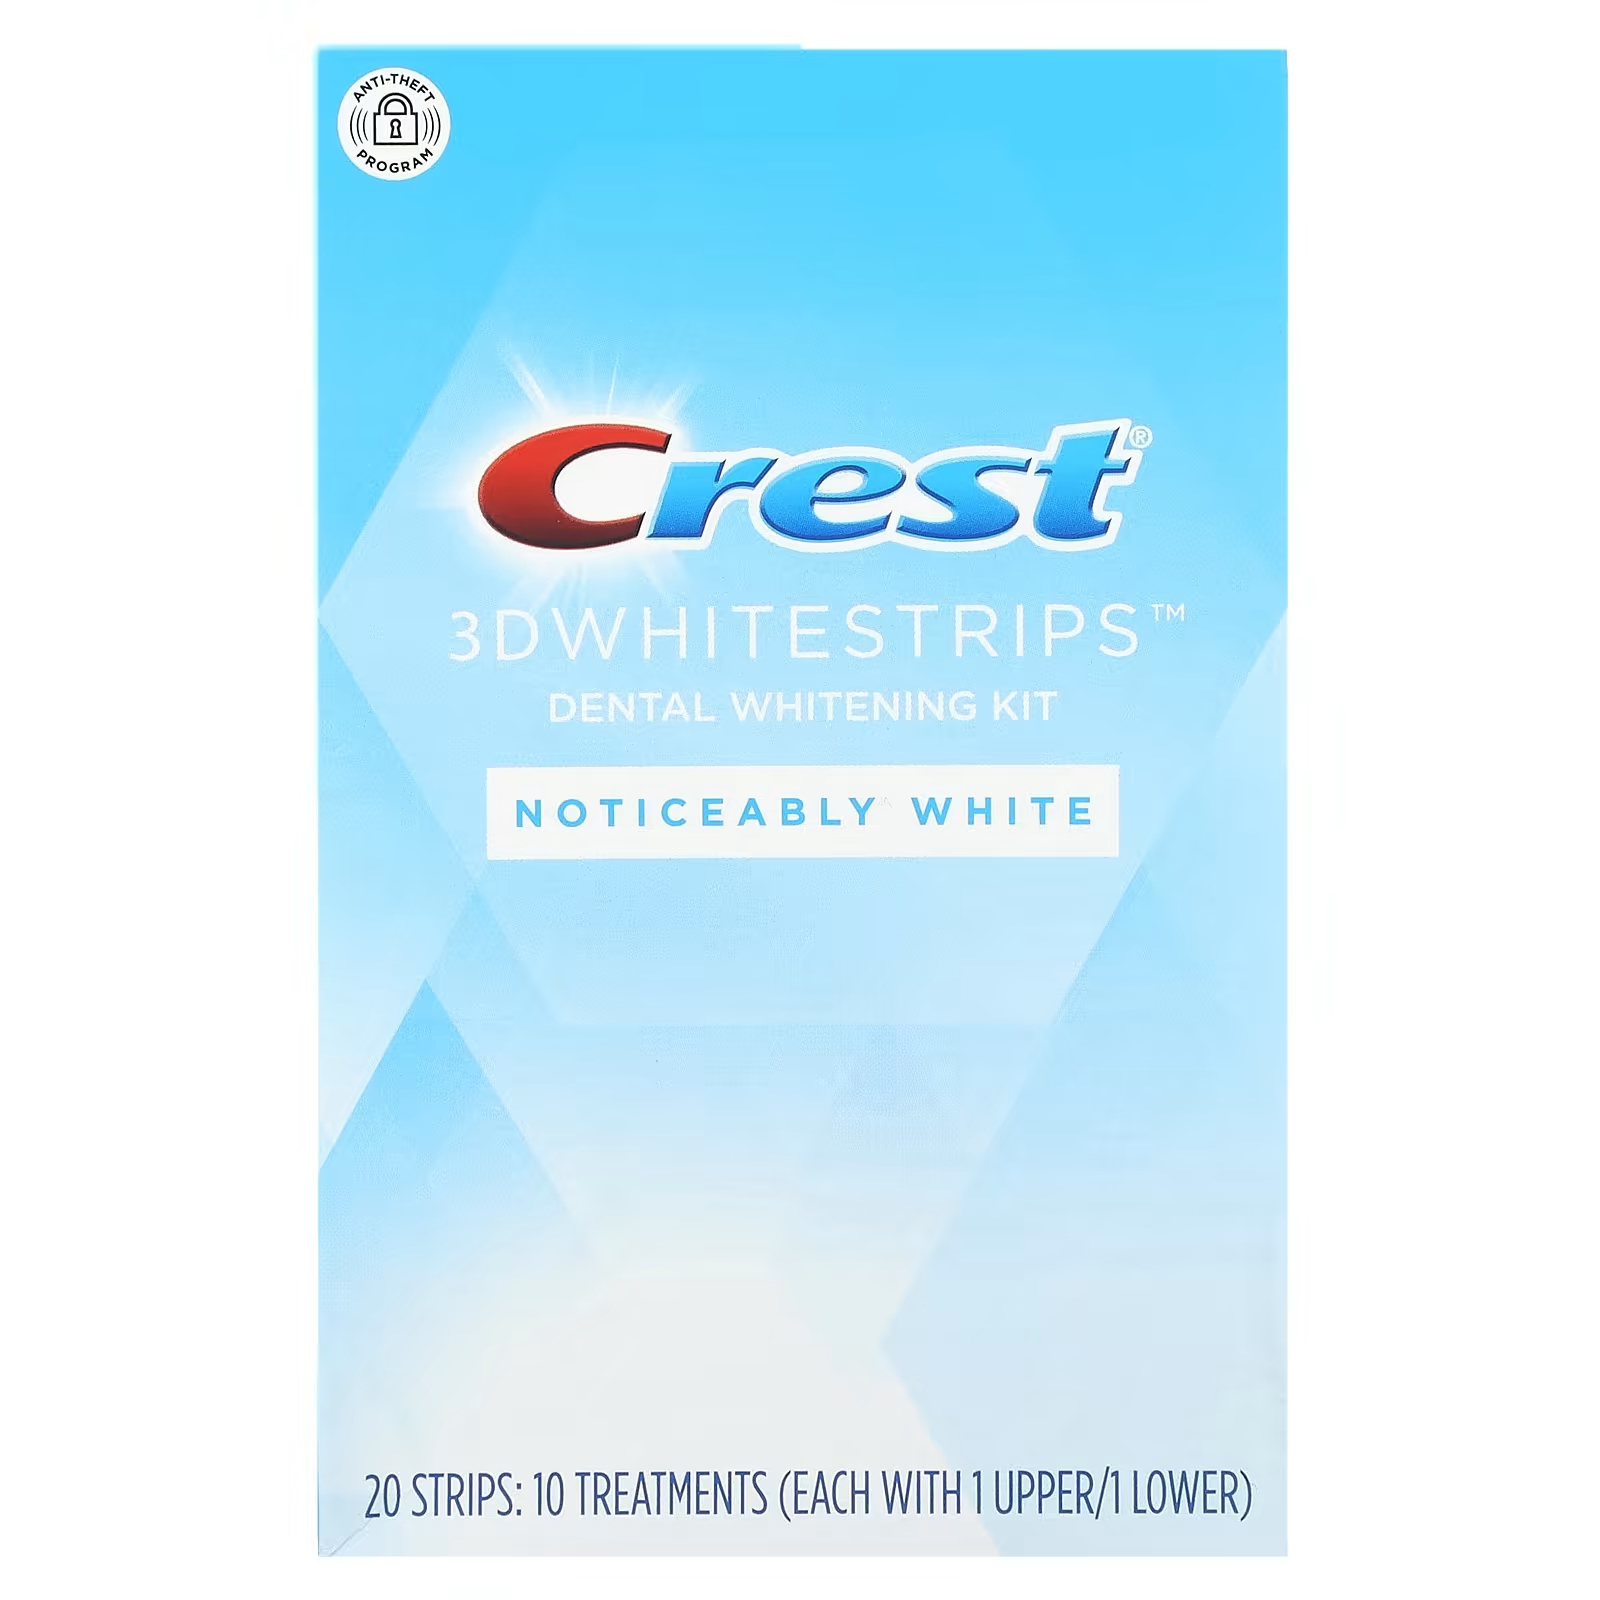 Набор для отбеливания зубов Crest 3D Whitestrips заметный белый цвет, 20 шт. crest 3d whitestrips glamorous white комплект для отбеливания зубов 28